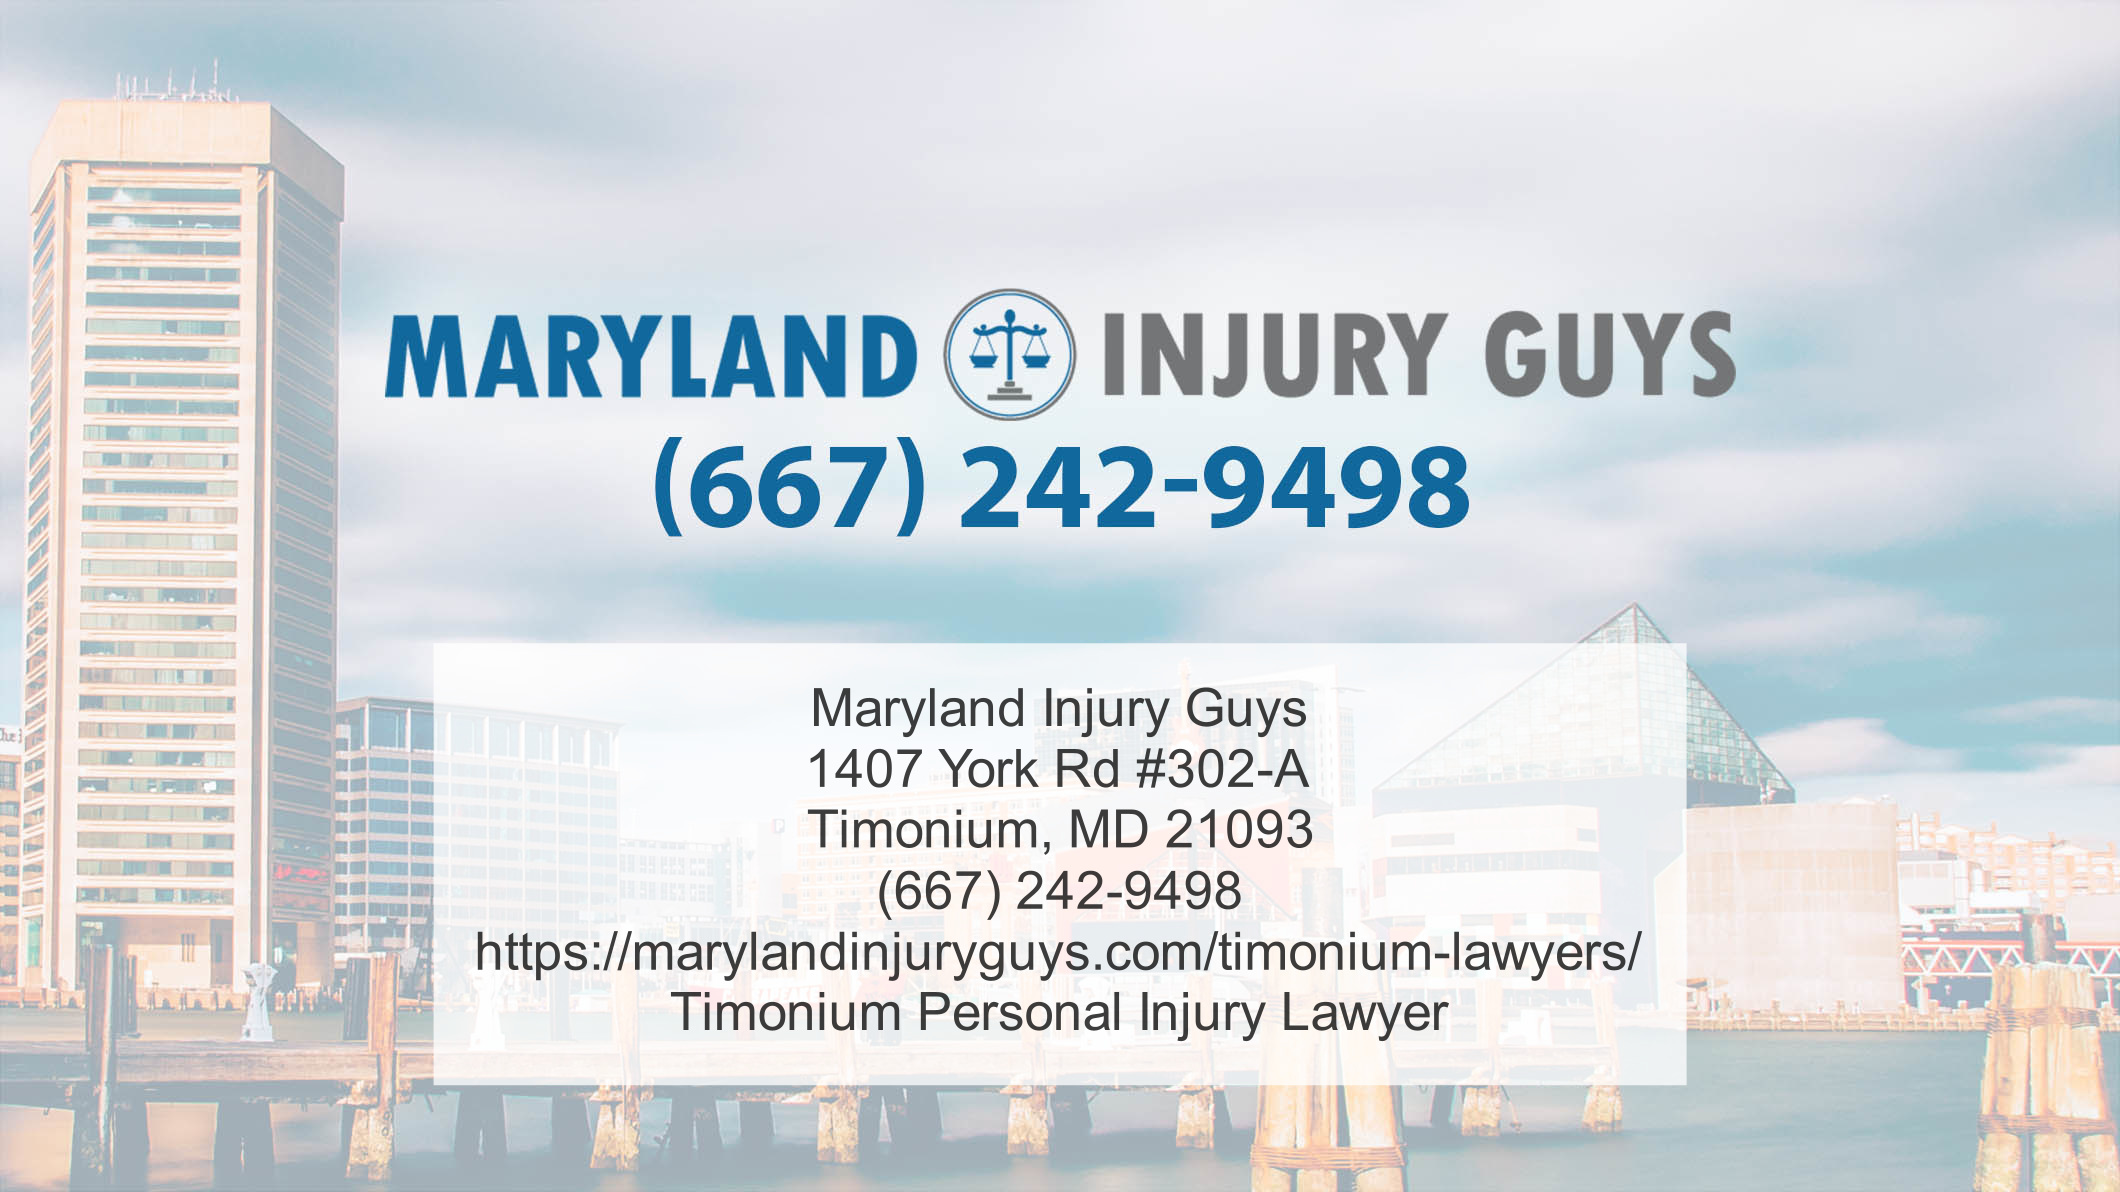 Personal-Injury-Lawyer-Near-Me-Timonium-Maryland-Injury-Guys.jpg